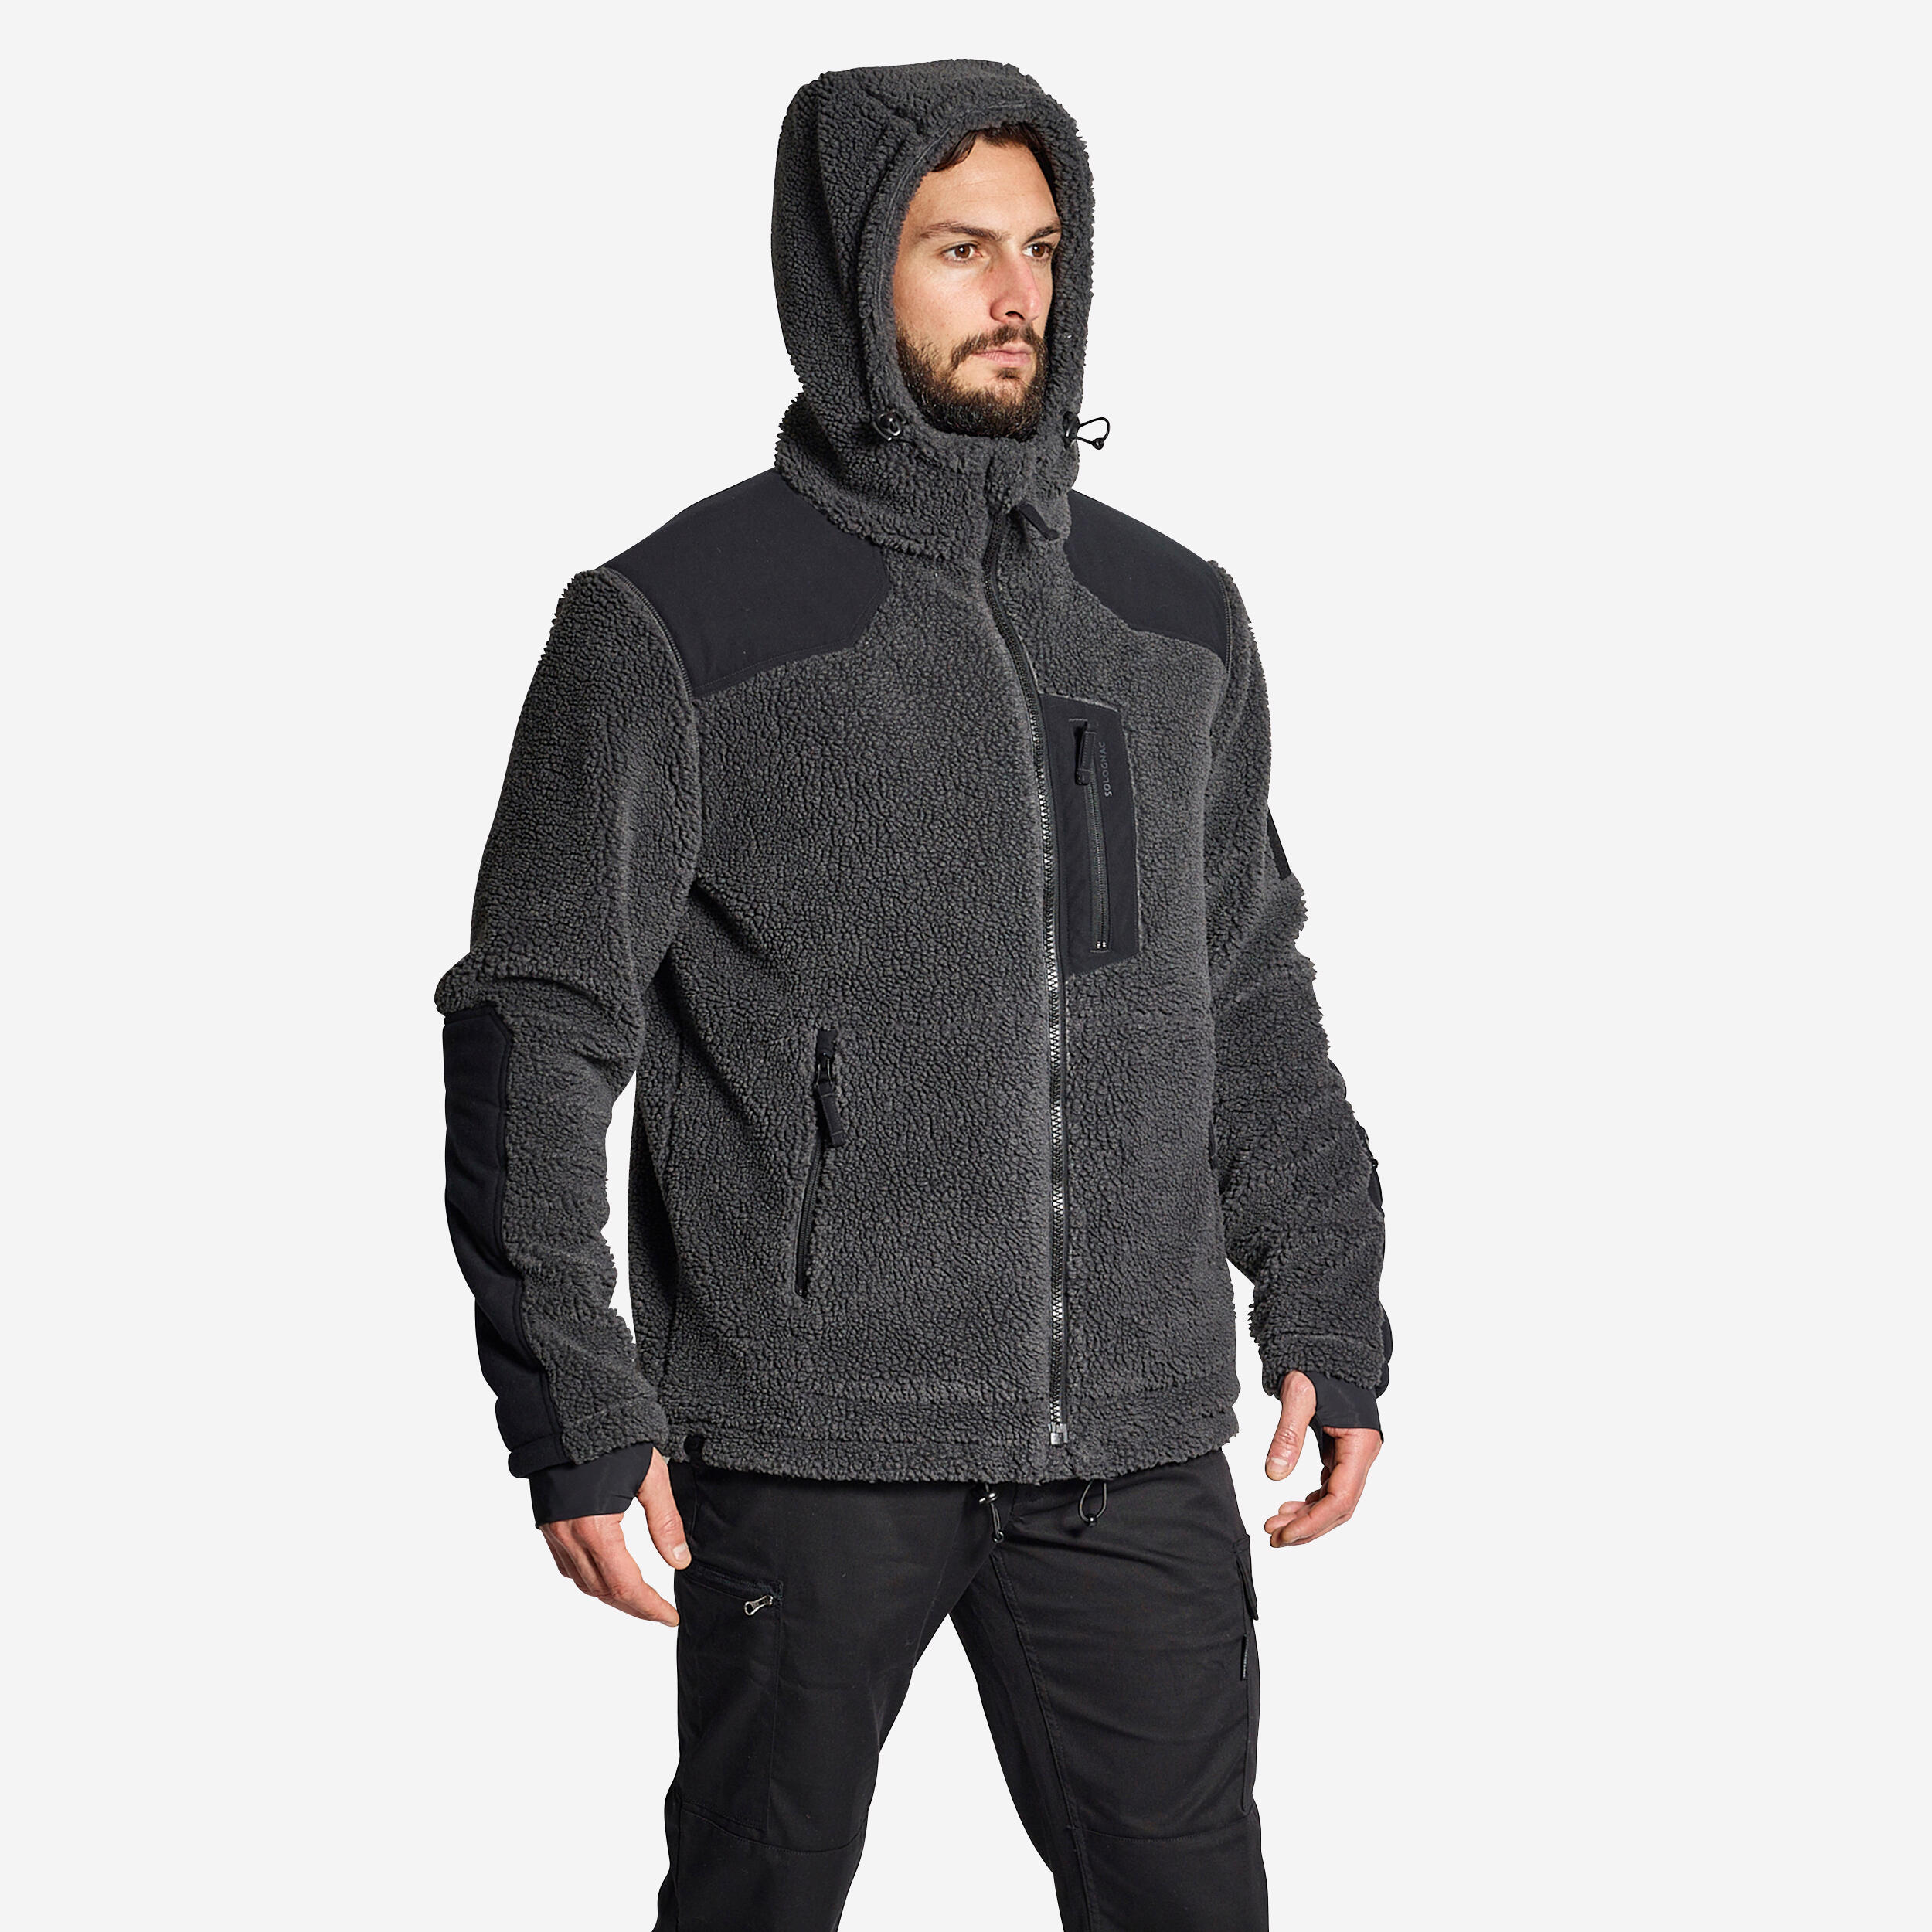 skpabo Men's Winter Thermal Thick Warm Fleece Sherpa Lined